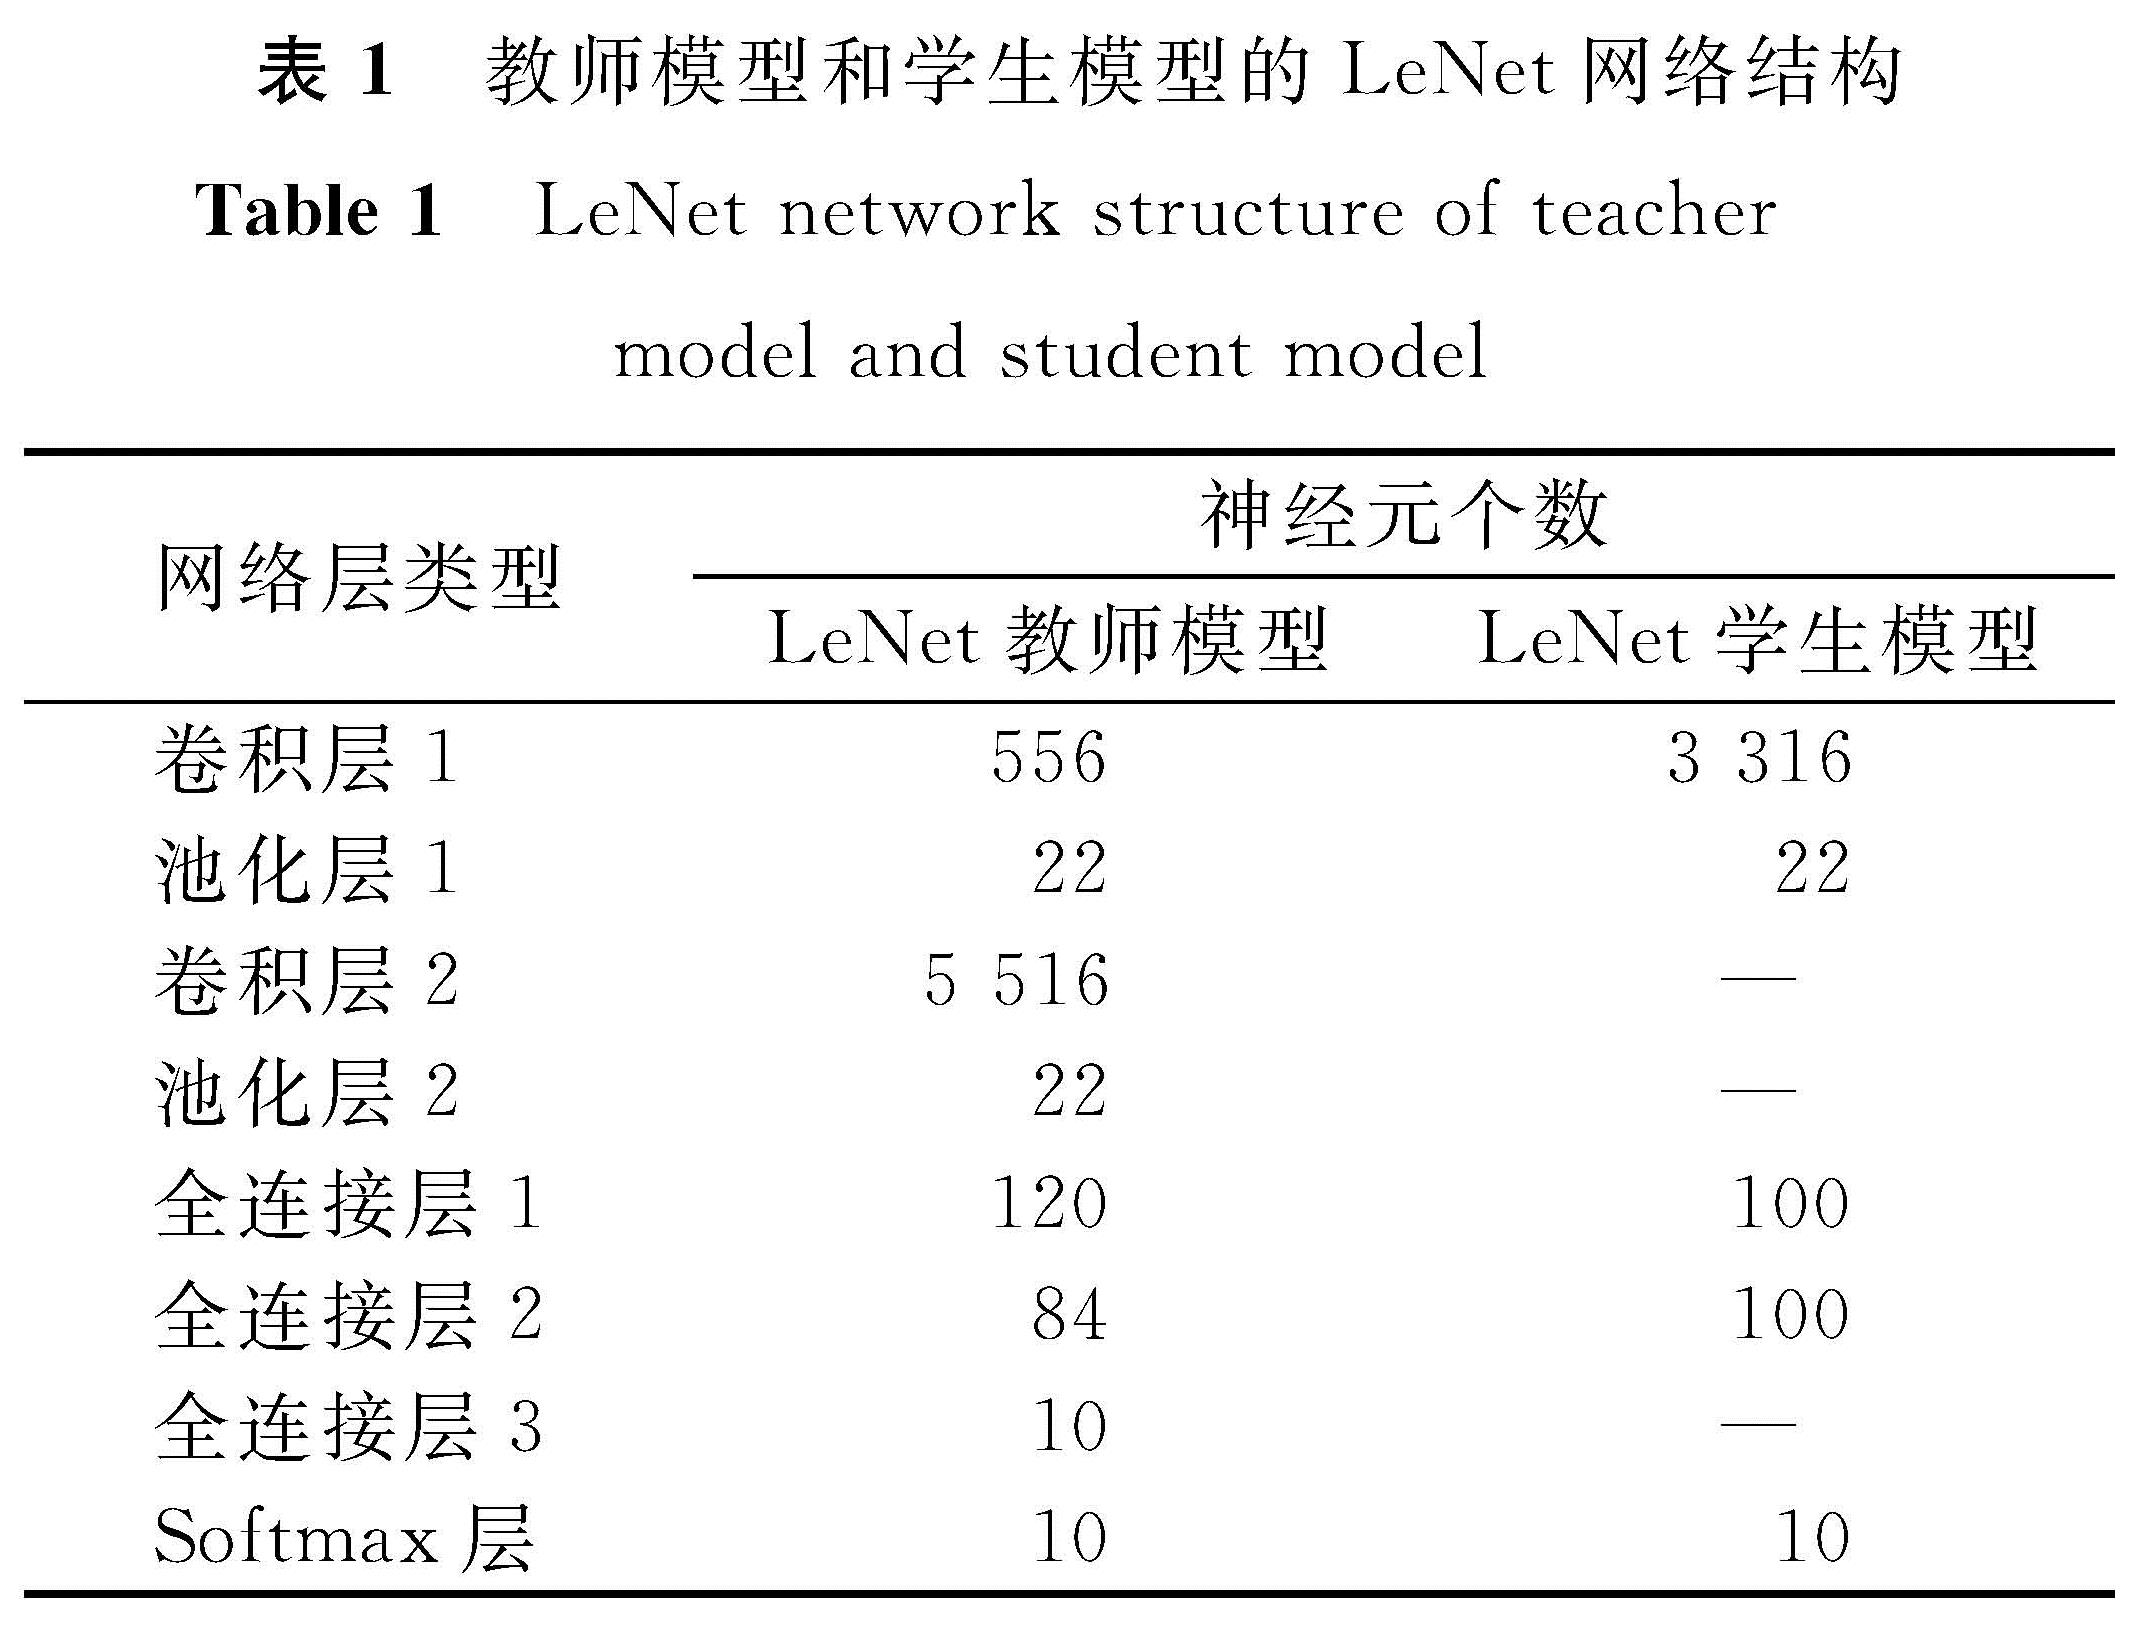 表1 教师模型和学生模型的LeNet网络结构<br/>Table 1 LeNet network structure of teacher model and student model